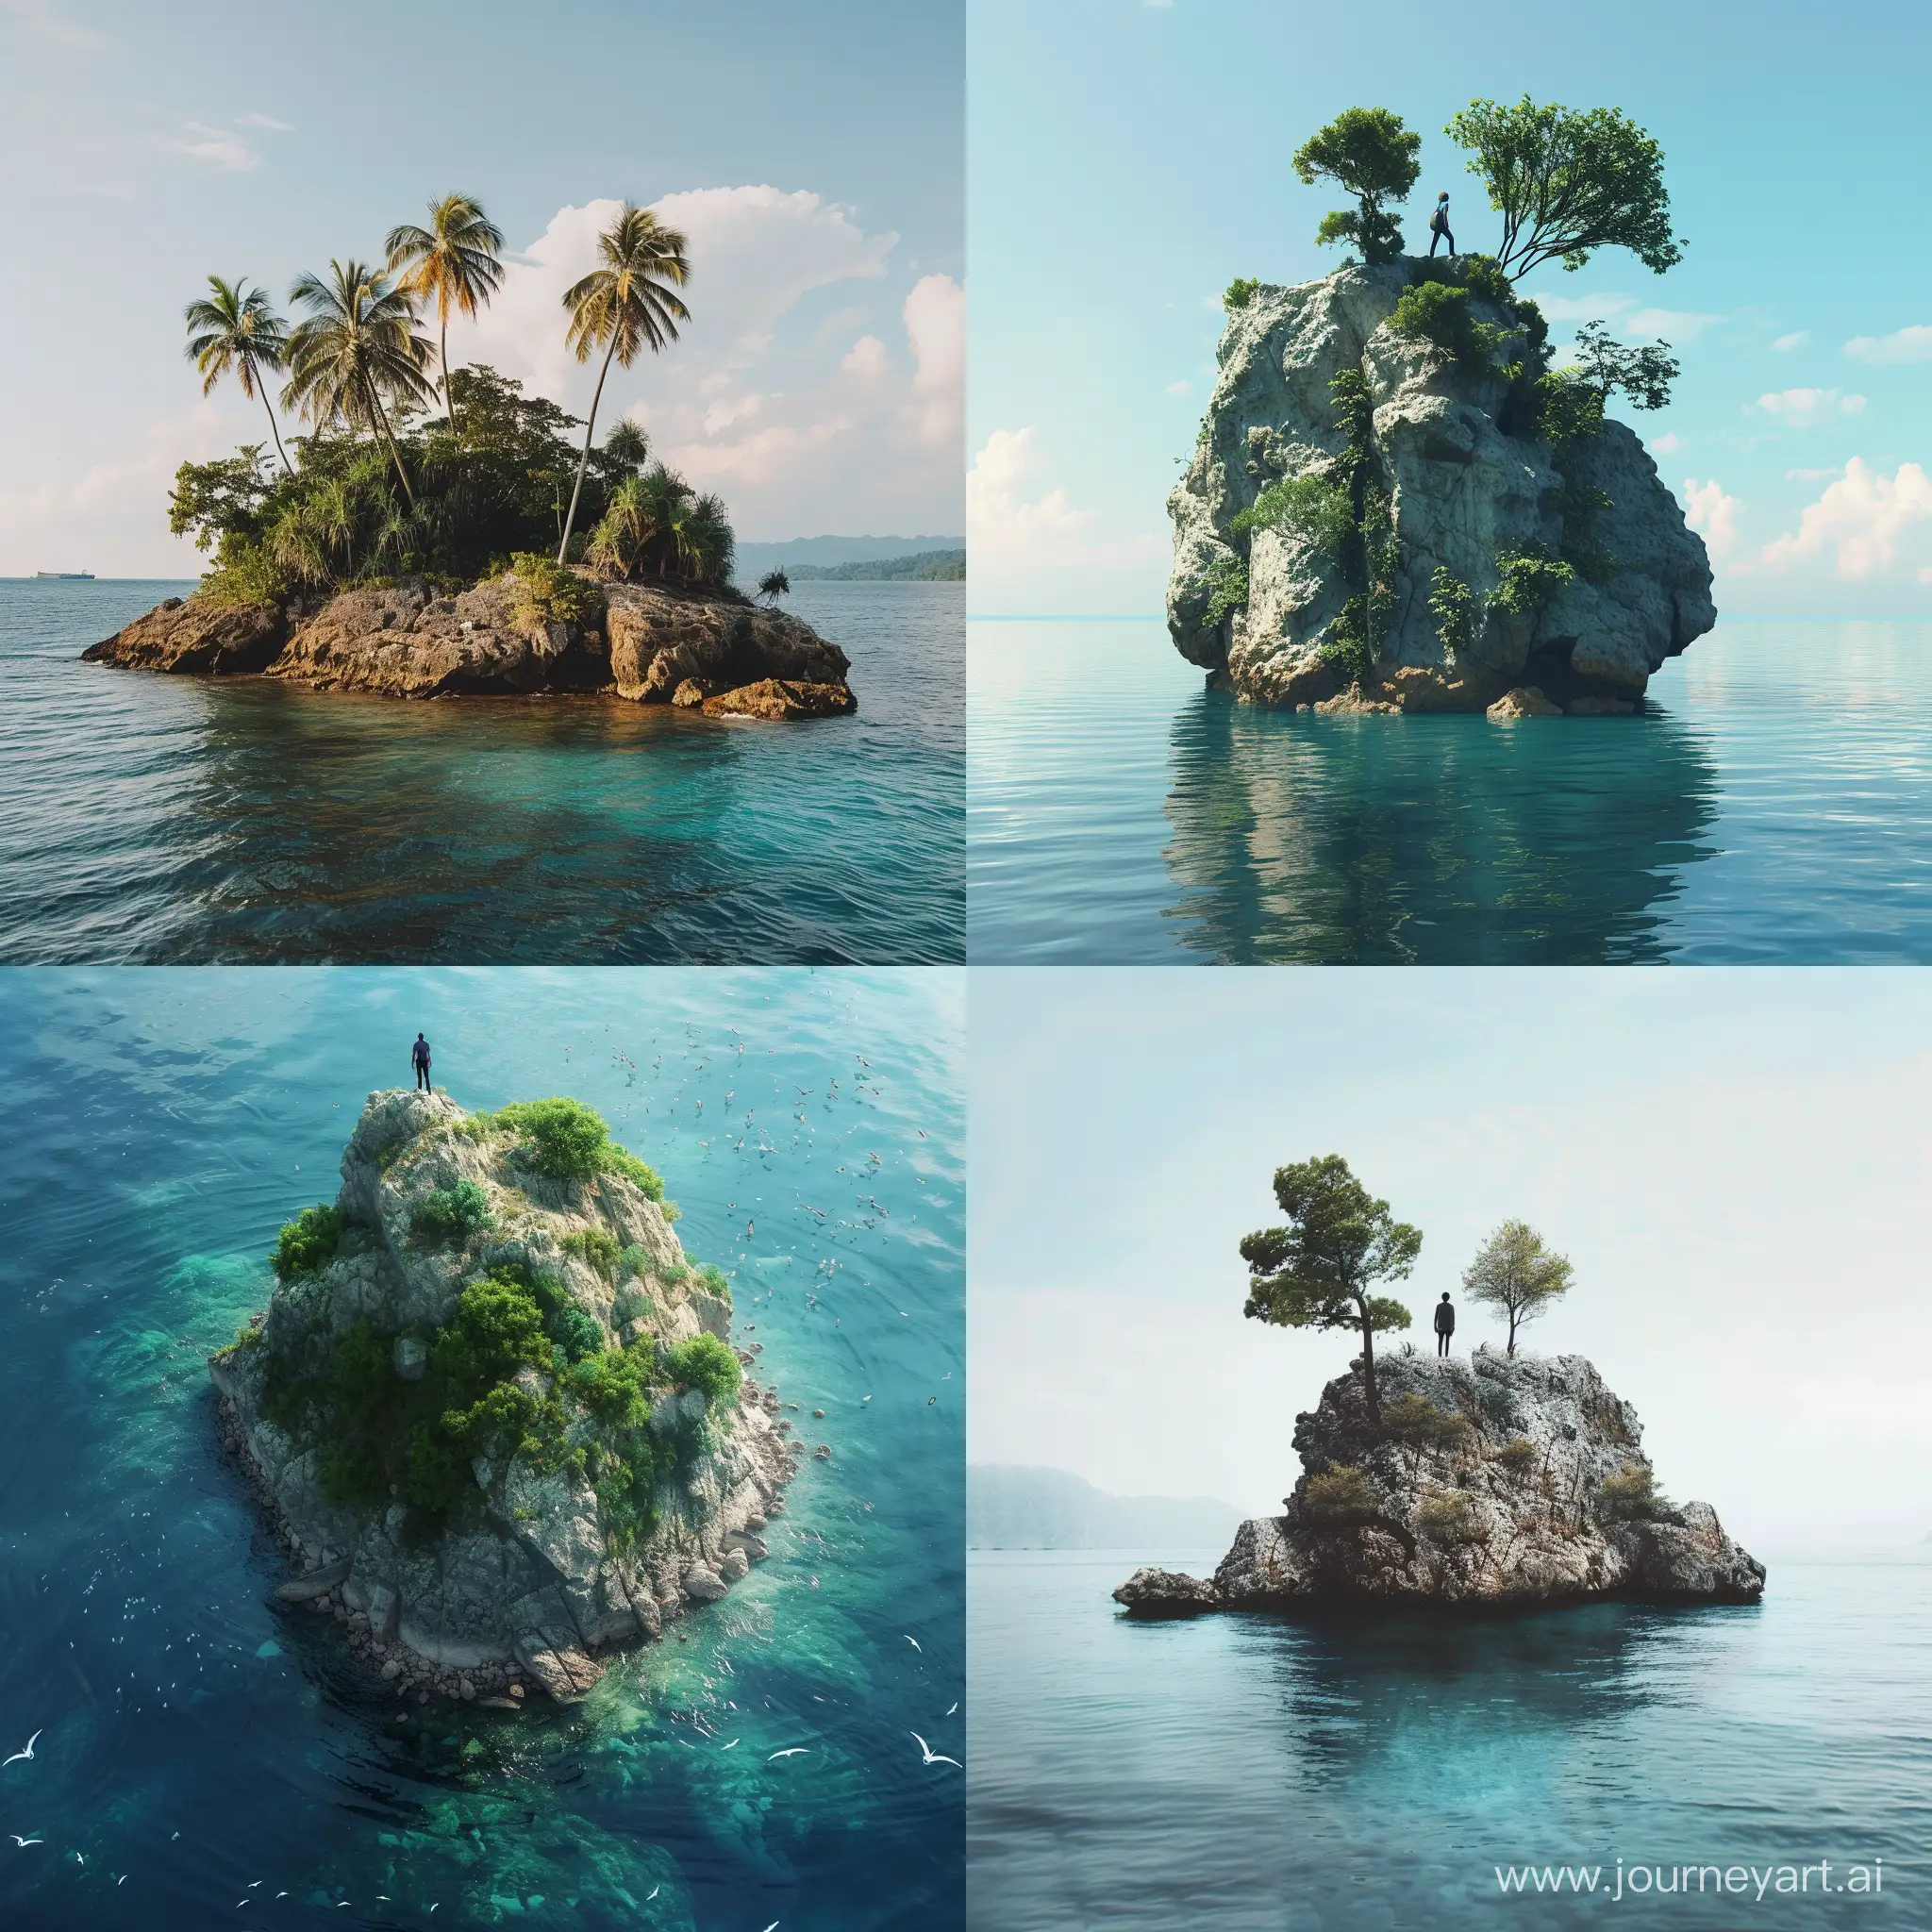 Solo-Survival-on-Deserted-Island-Struggle-for-Survival